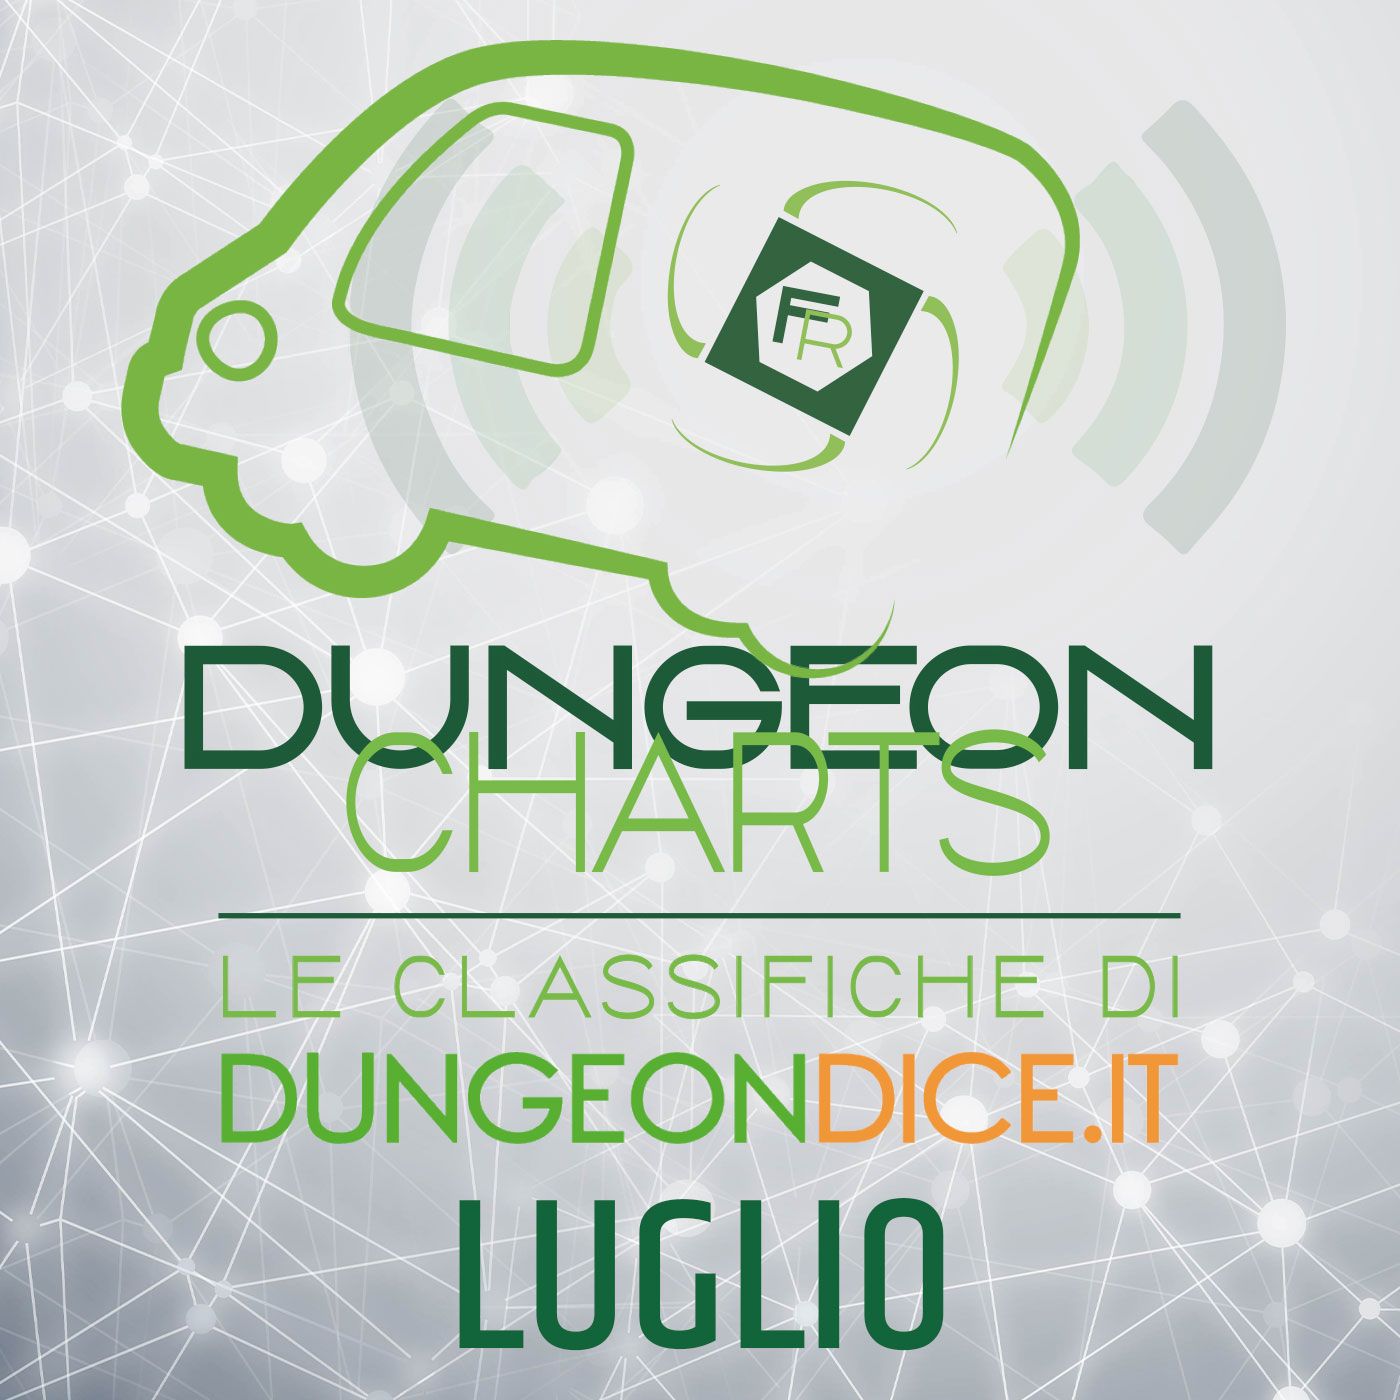 Dungeon Charts - Luglio 2021